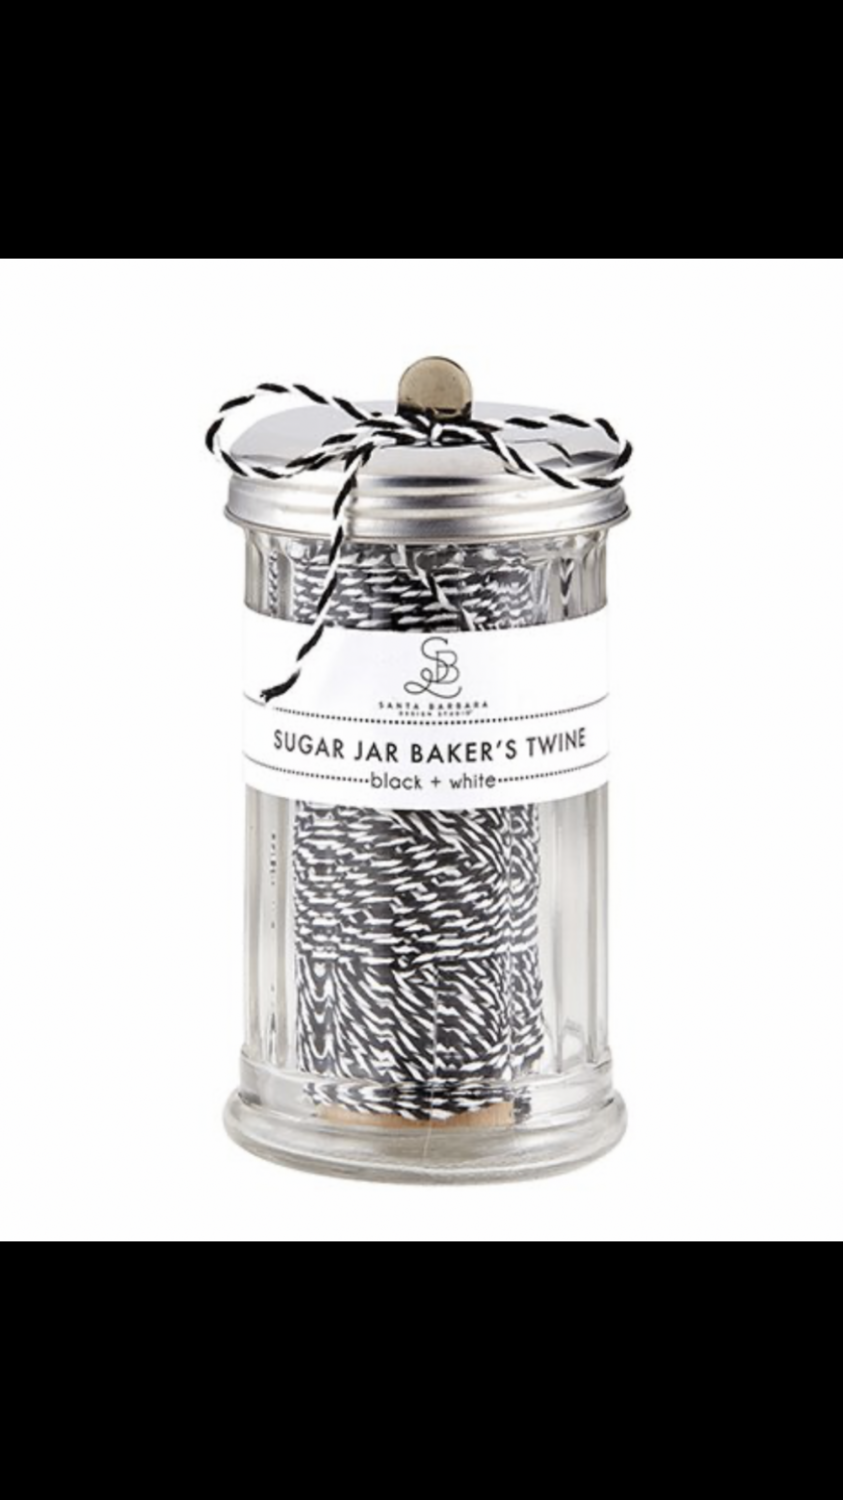 Sugar Jar Bakers Twine - Black and White